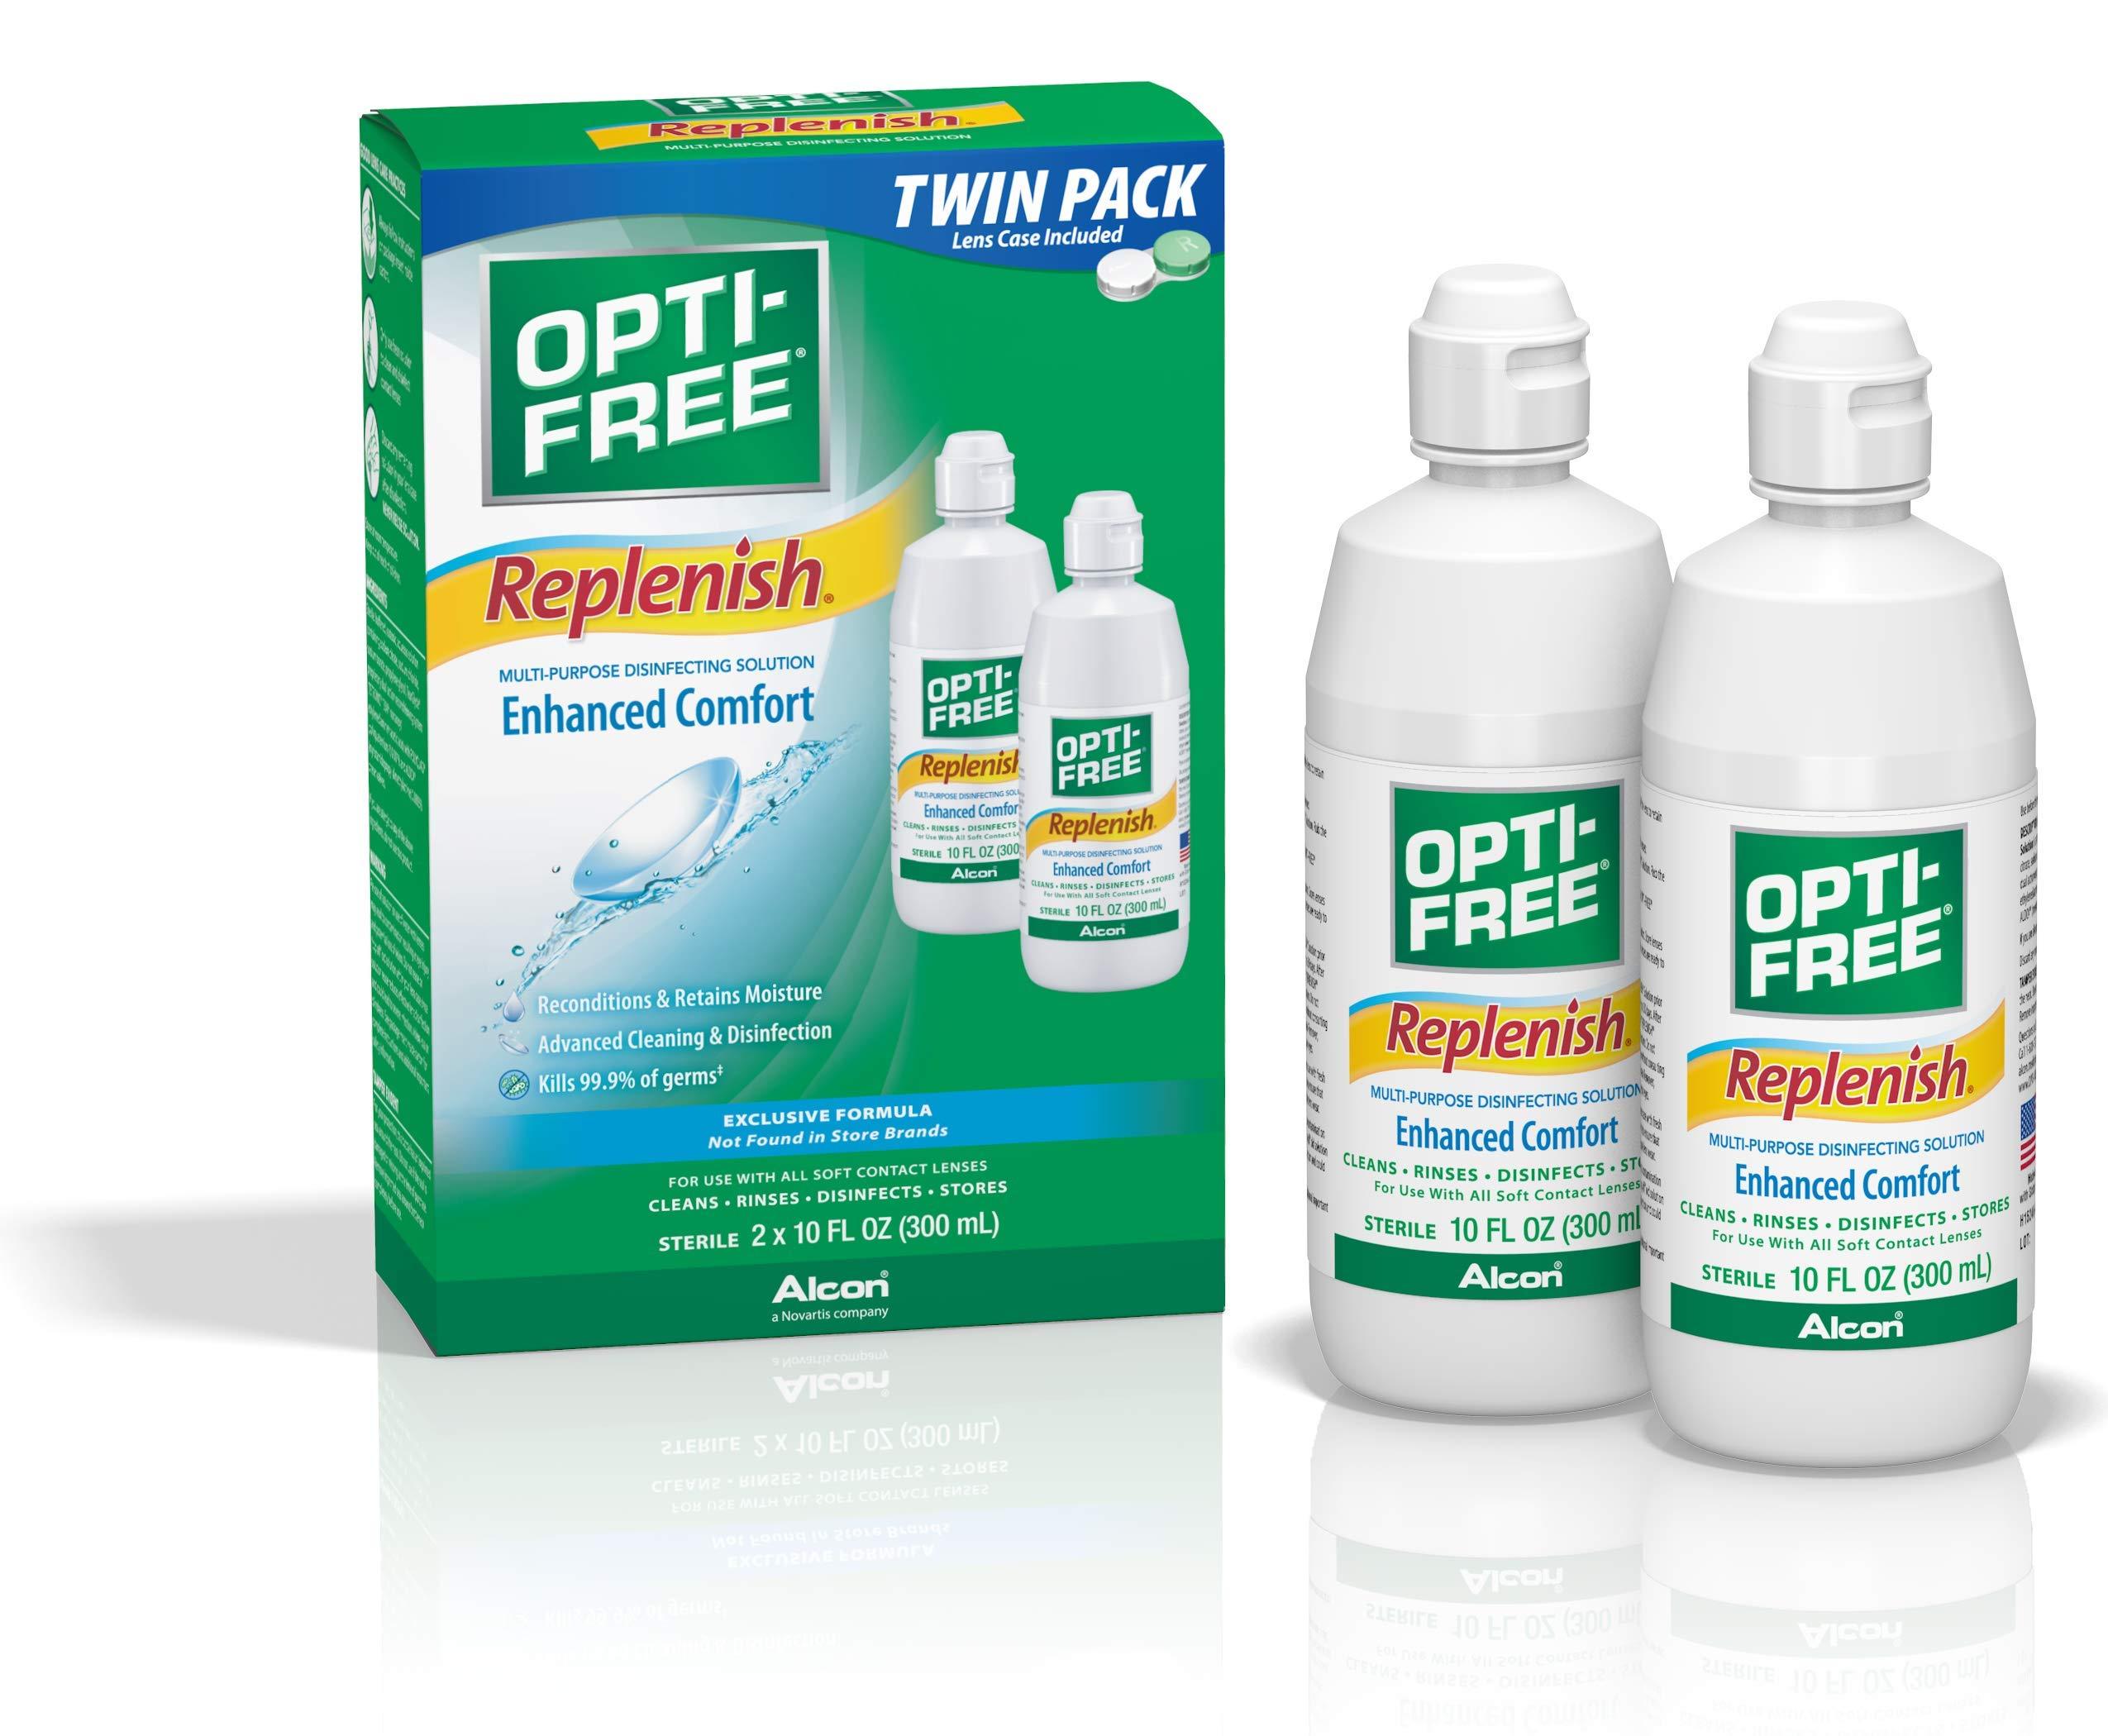 OptiFree Replenish MultiPurpose Disinfecting Solution